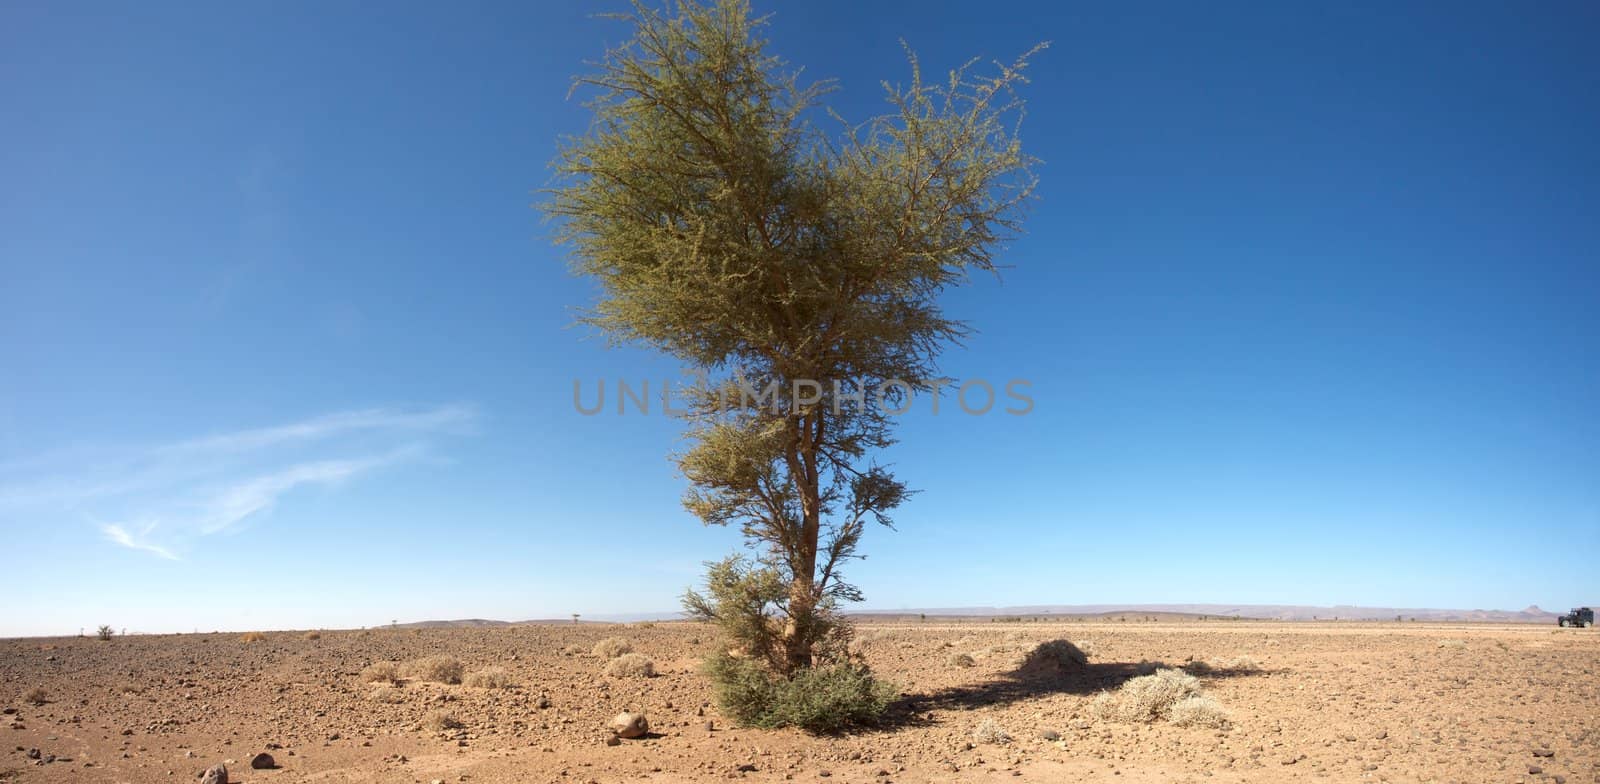 Sahara desert and the car by watchtheworld